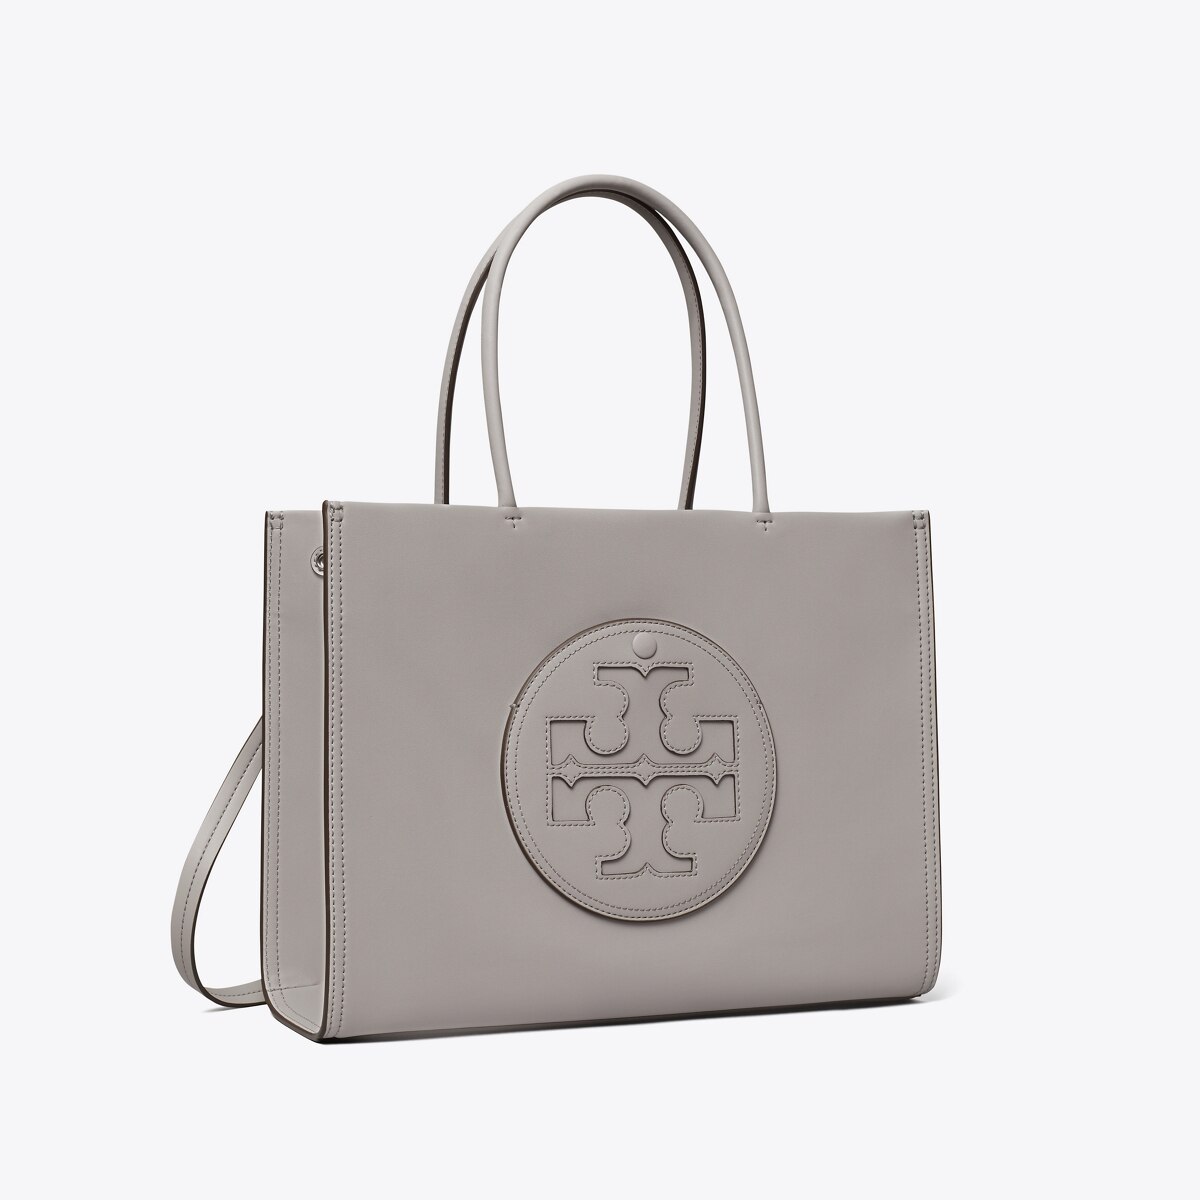 Ella Bio Tote: Women's Handbags, Tote Bags